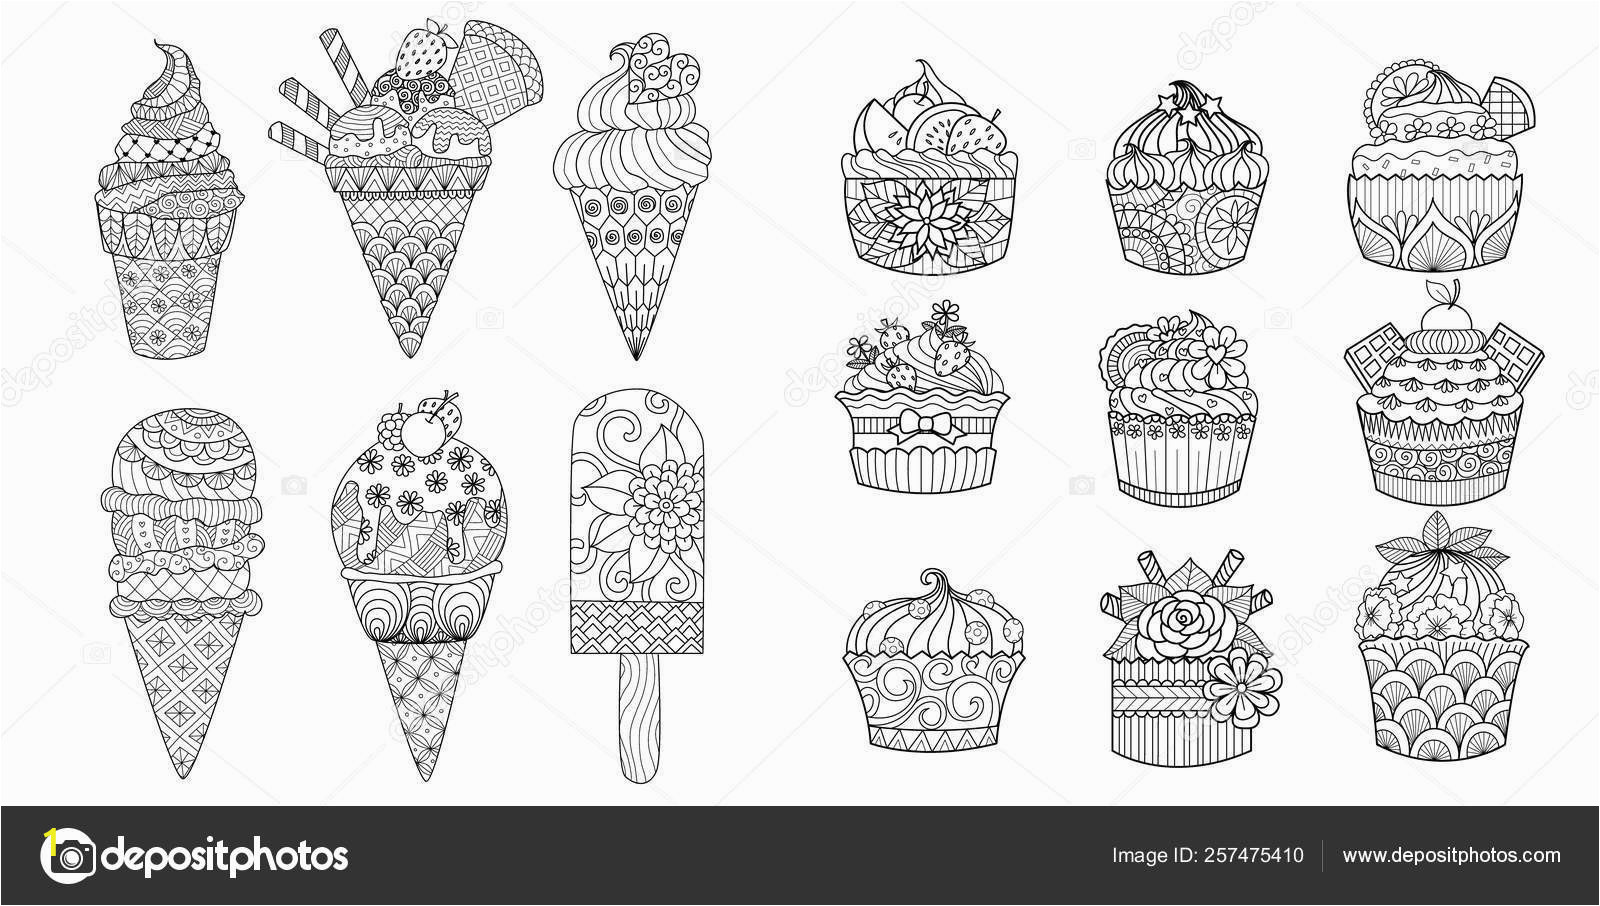 depositphotos stock illustration drawing ice cream cupcakes set